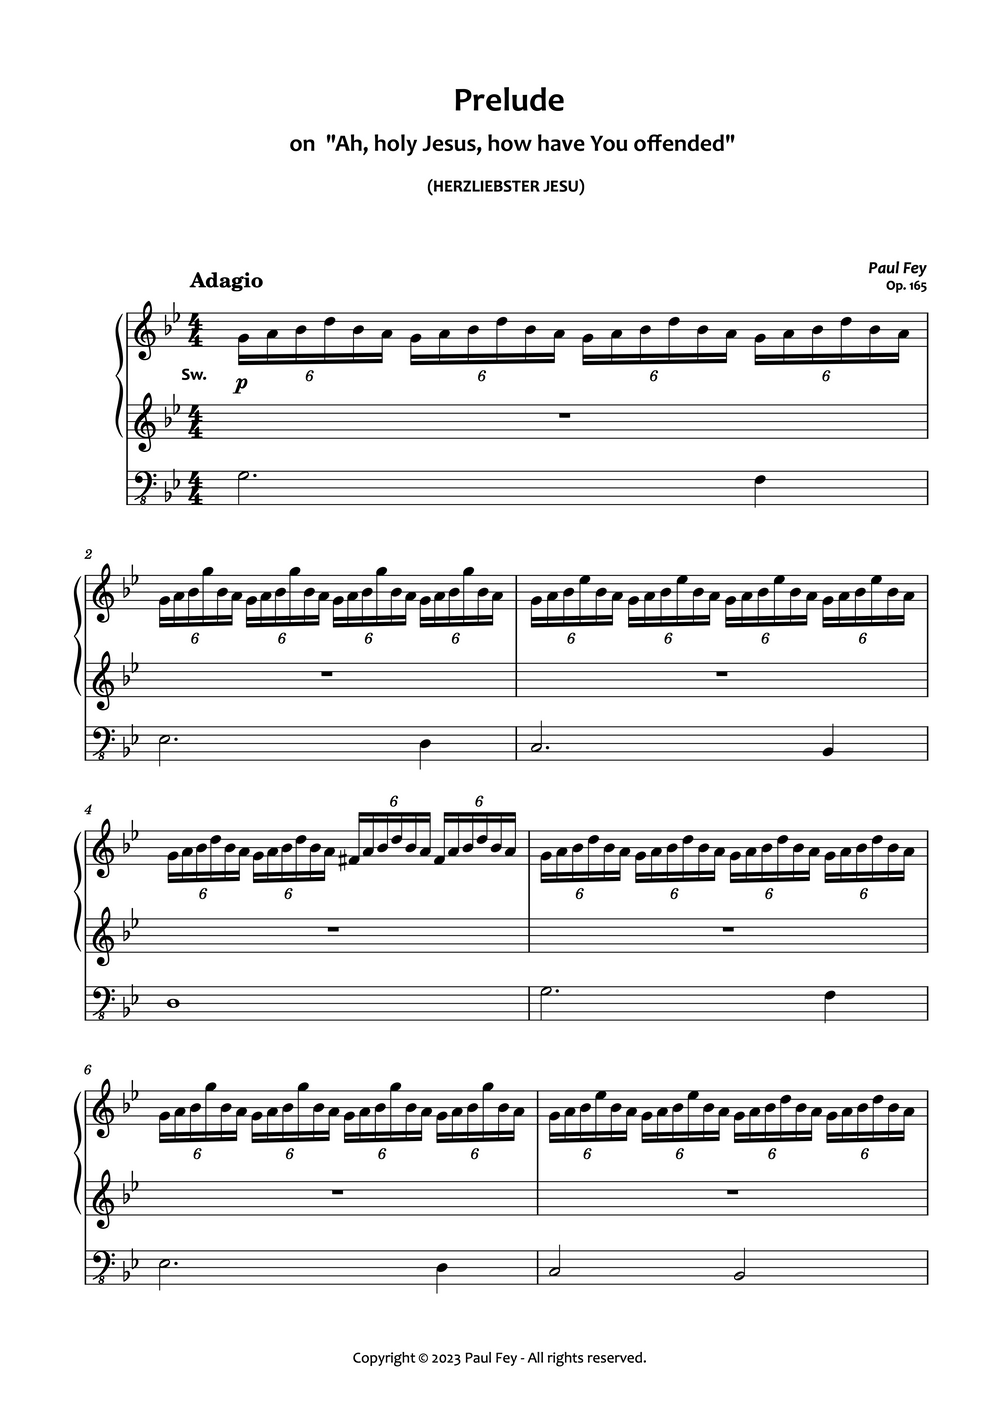 Prelude on 'Ah, Holy Jesus' (Sheet Music) - Music for Organ PDF Download